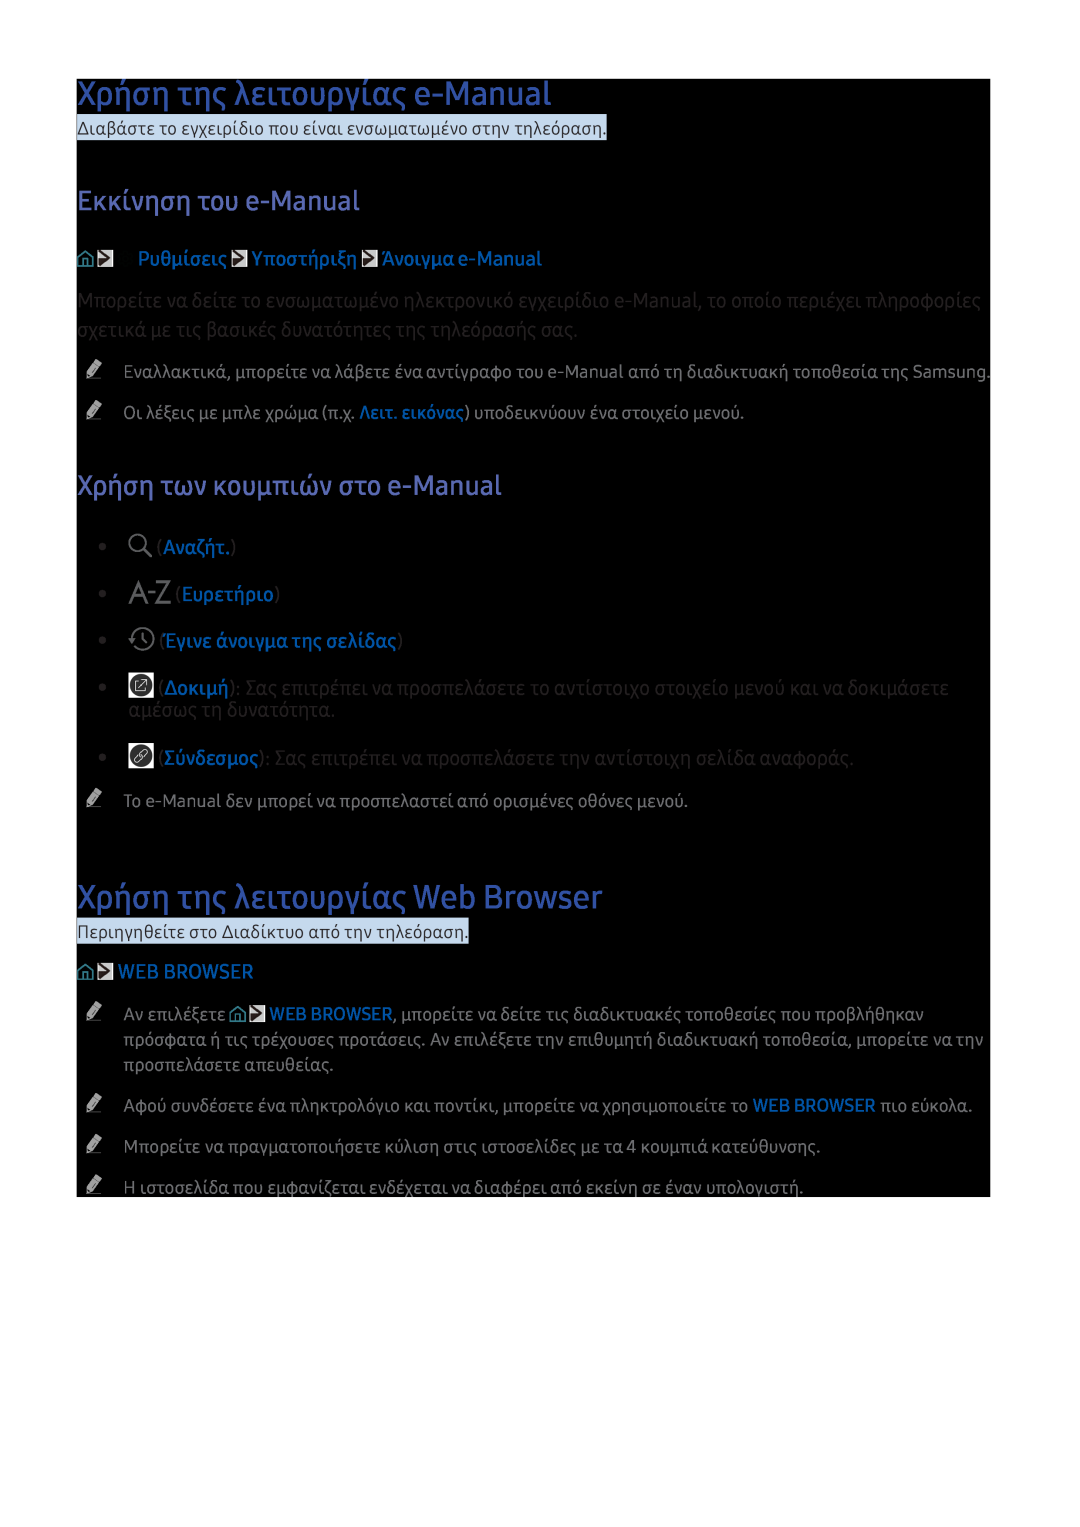 Samsung UE49KU6400SXXH Χρήση της λειτουργίας e-Manual, Χρήση της λειτουργίας Web Browser, Εκκίνηση του e-Manual, Ευρετήριο 